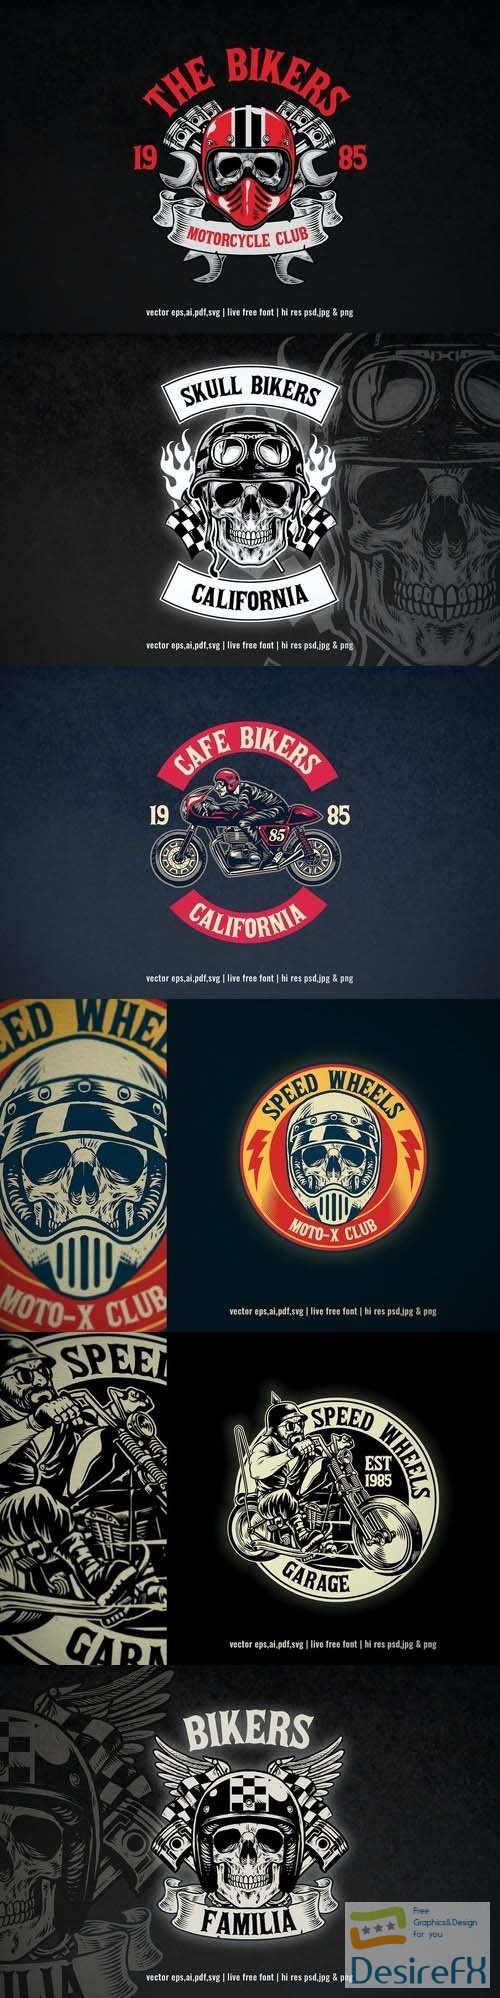 Motorcycle club logo